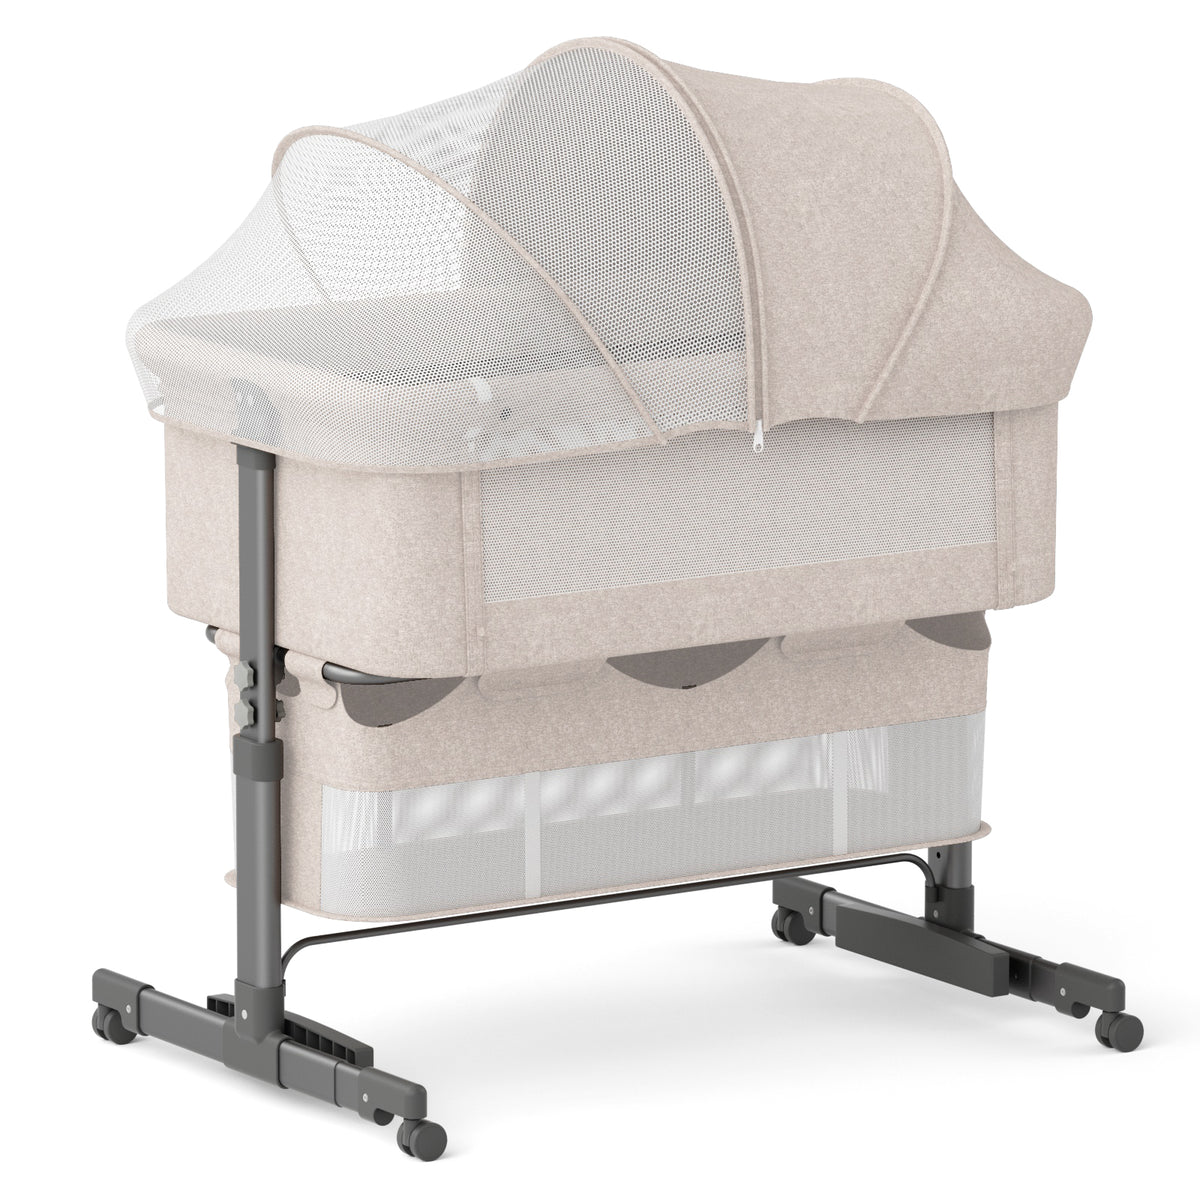 Pre-sale, 67i Baby Newborn Bedside Sleeper Bassinet Crib with Wheels, Storage Basket- Beige